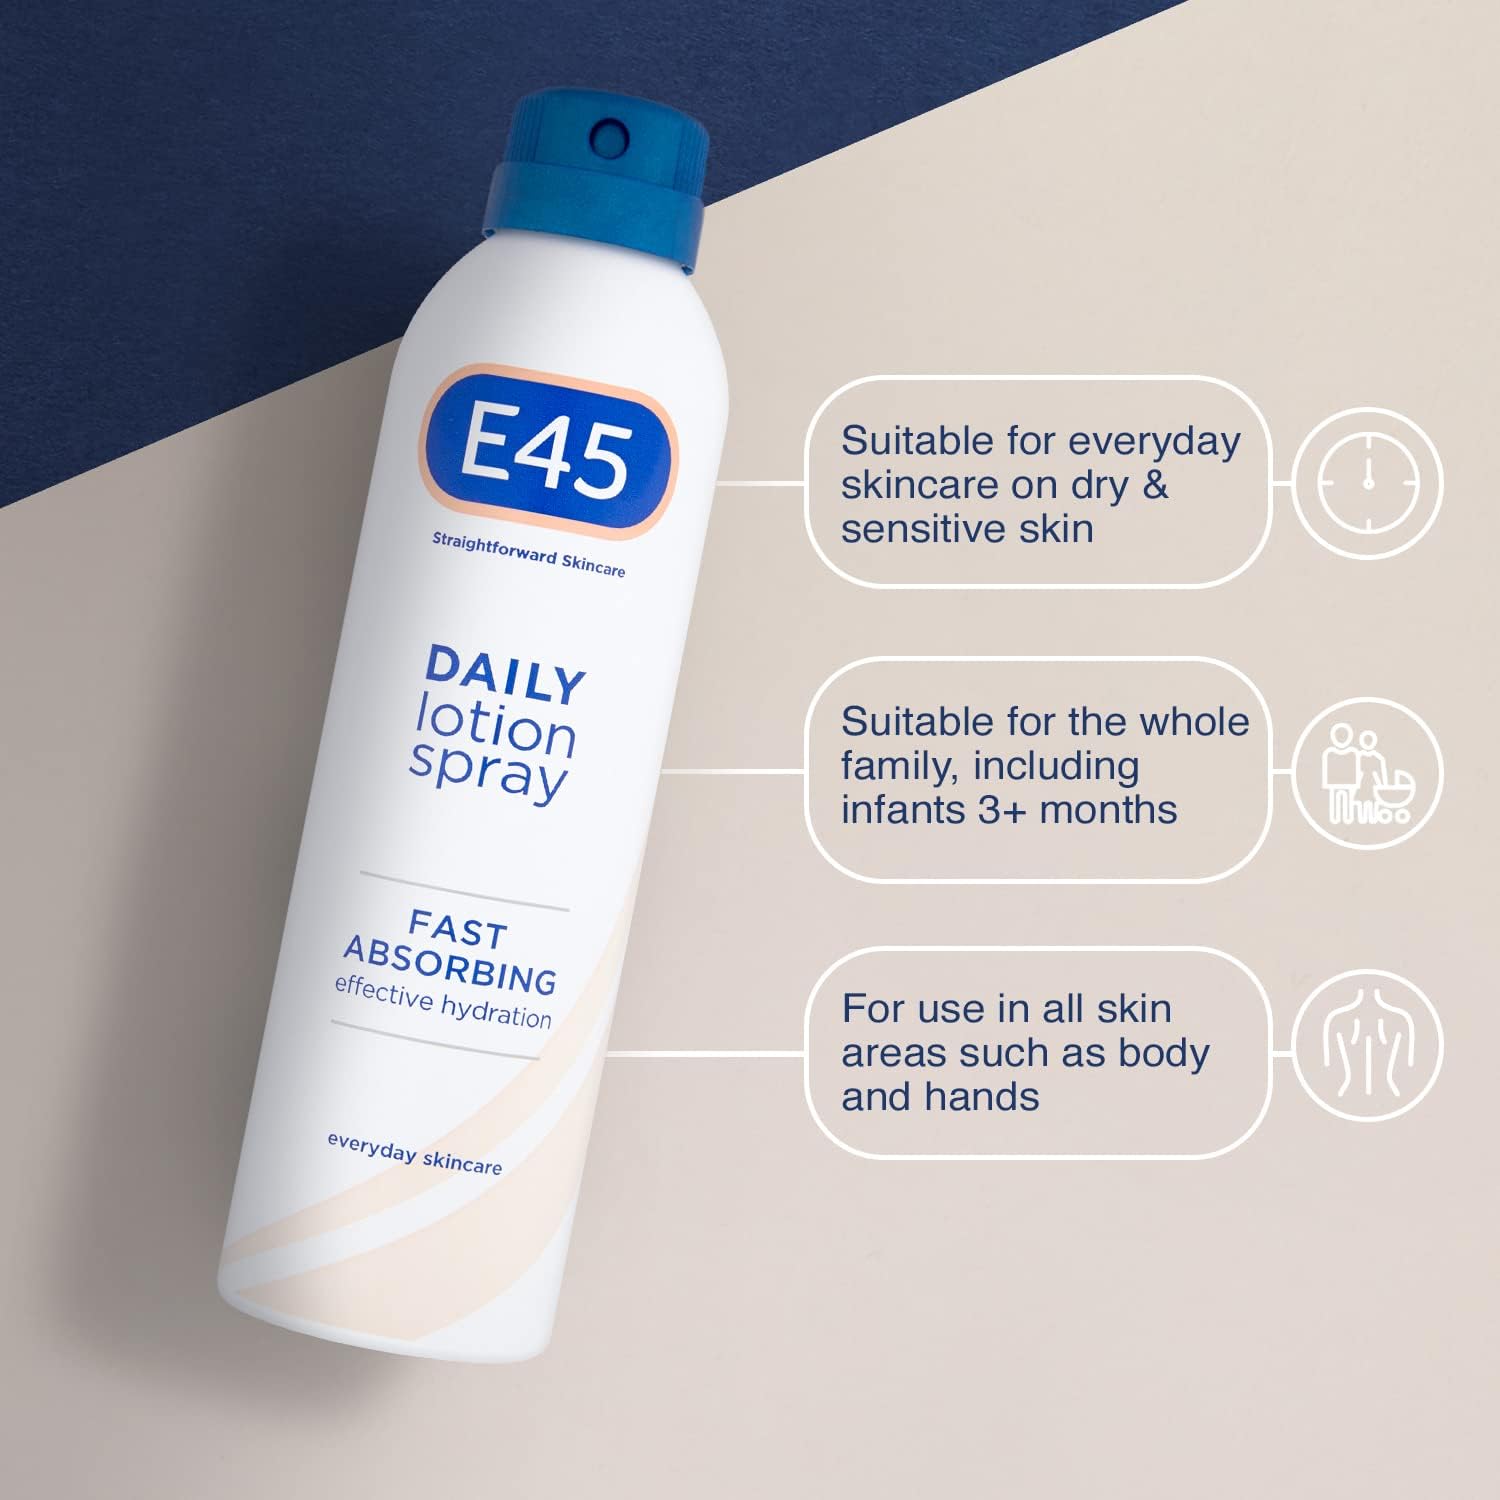 E45 Spray Moisturiser 200 ml - Daily Lotion Moisturiser Spray for Dry Sensitive Skin - Fast Absorbing Body Lotion Spray Moisturiser for Soft Skin and Lasting Hydration – Suitable for Eczema Prone Skin : Amazon.co.uk: Beauty